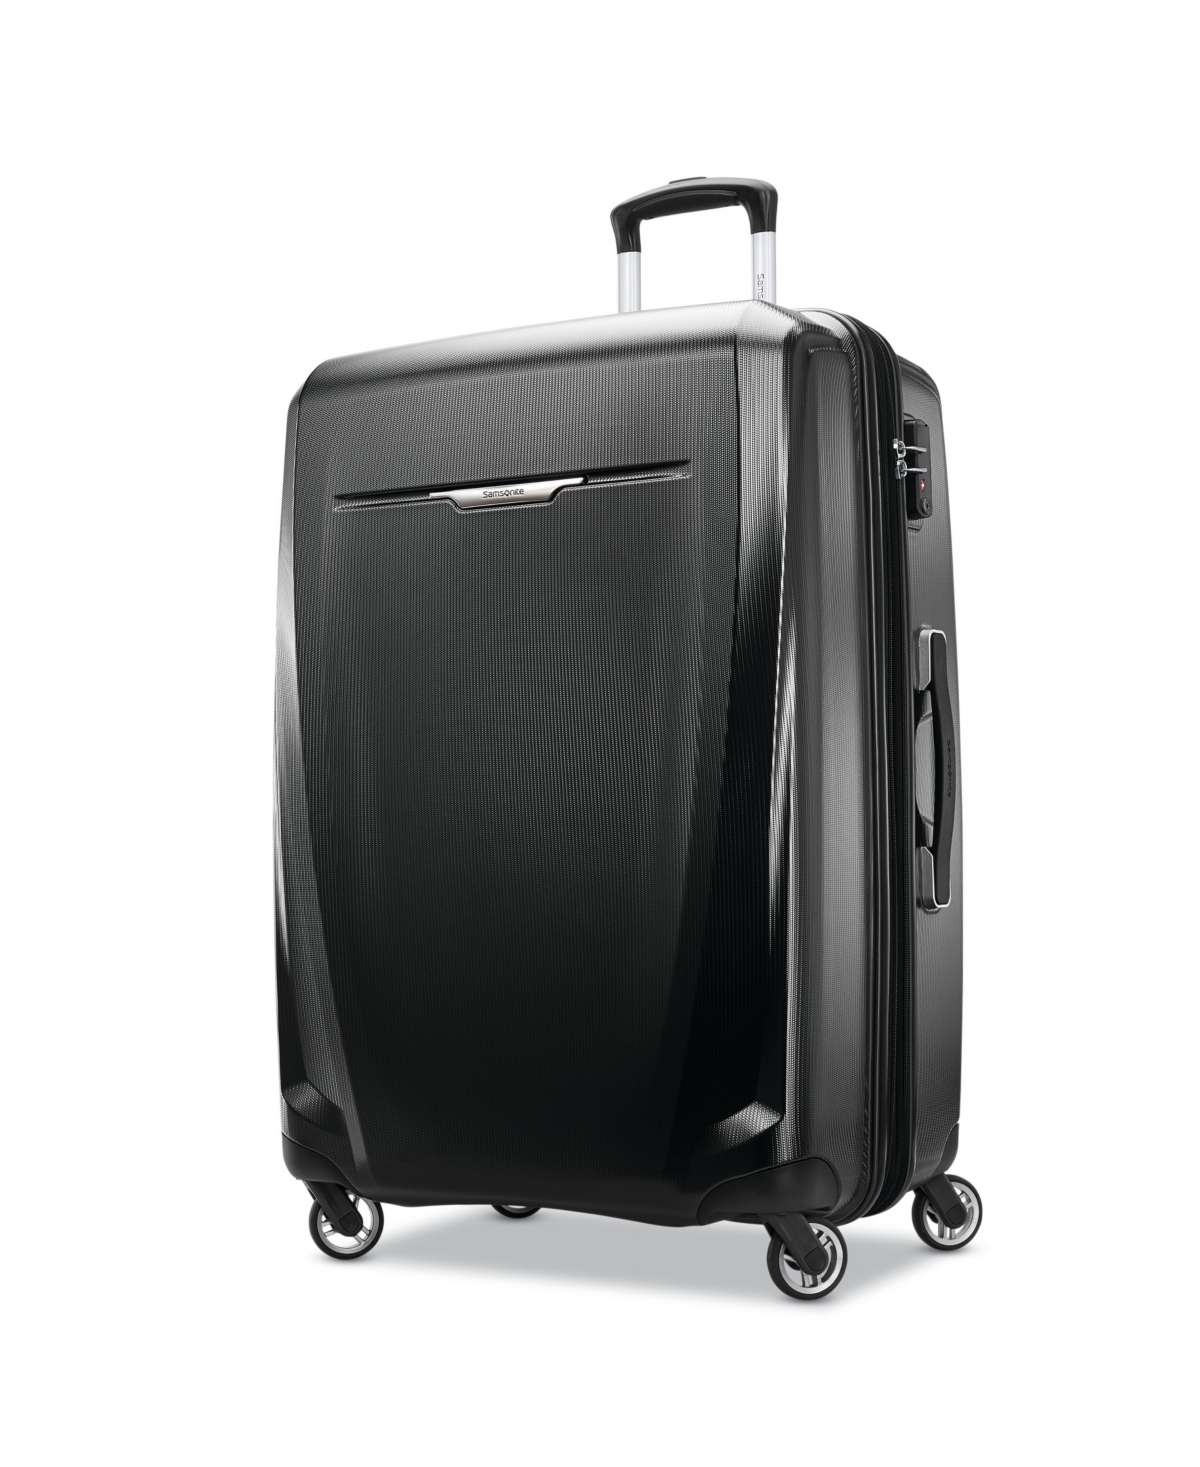 Samsonite Winfield 3 Dlx 28 Spinner Suitcase In Black